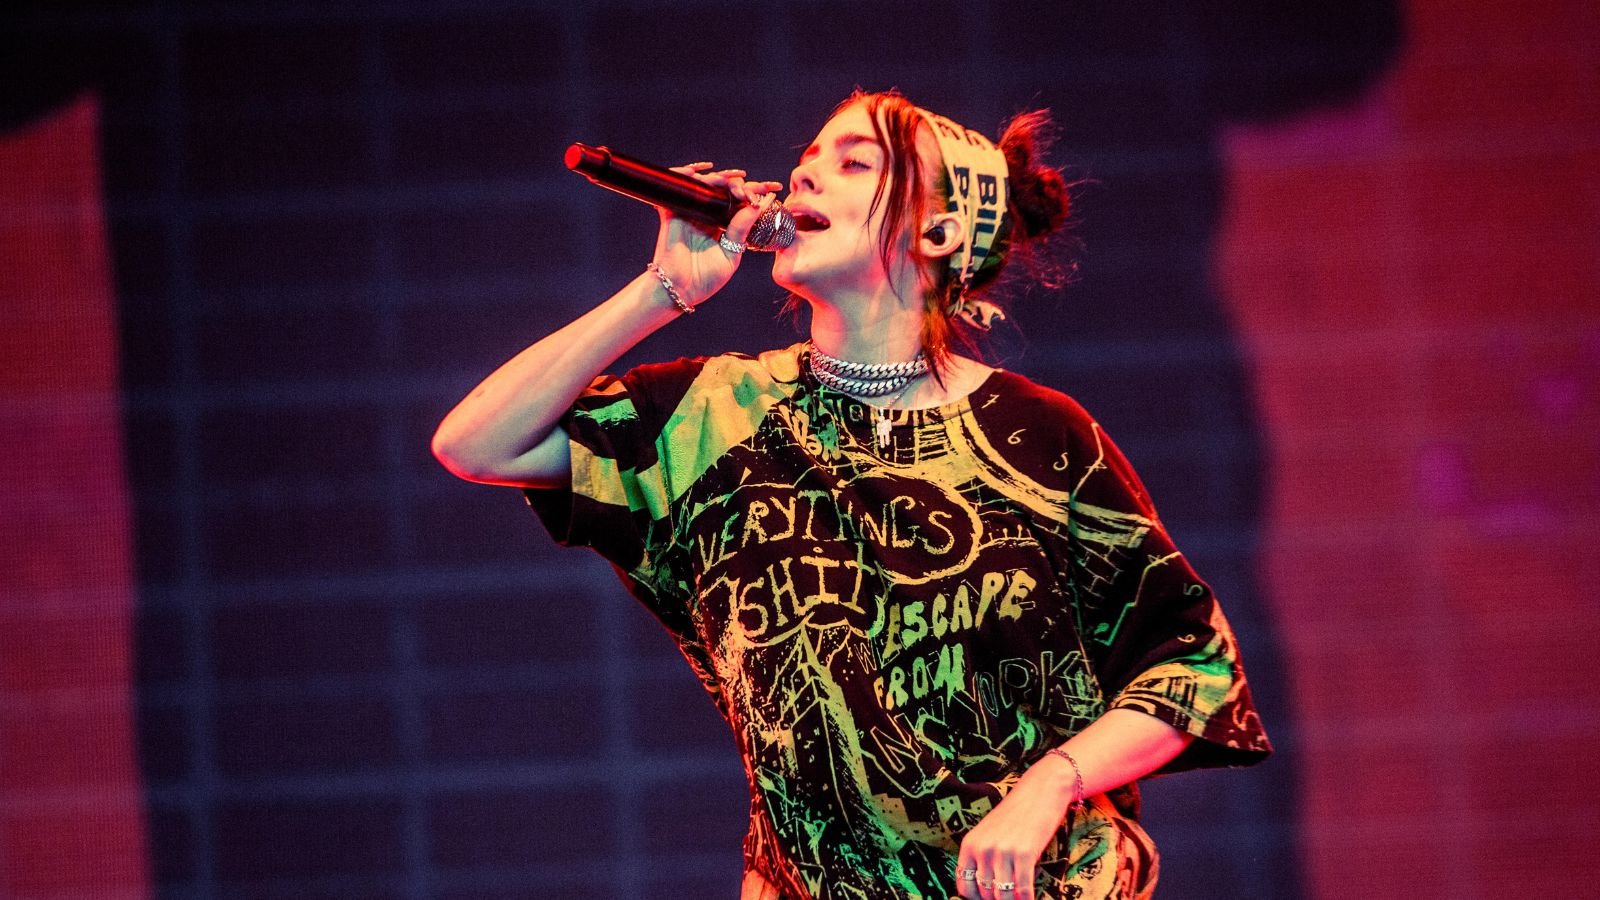 Vegan singer-songwriter Billie Eilish performing in green outfit